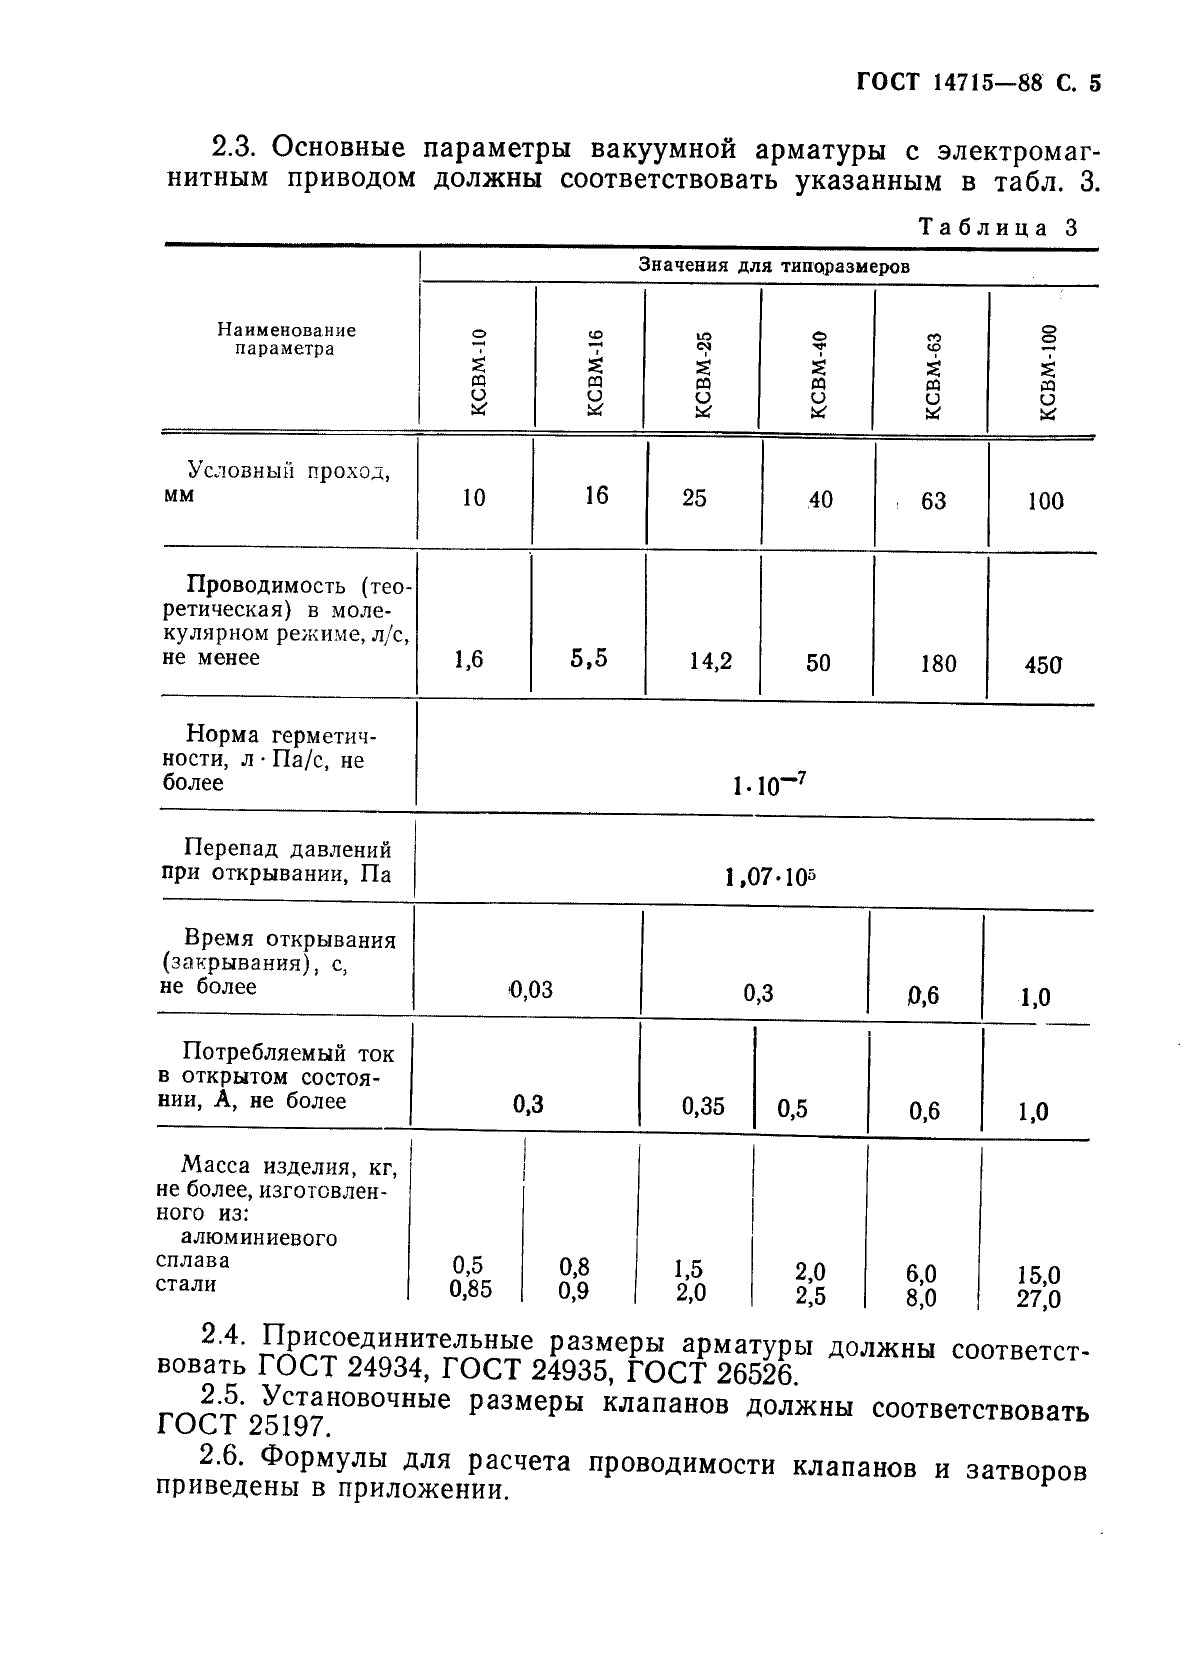 ГОСТ 14715-88 Арматура вакуумная. Типы. Основные параметры (фото 7 из 8)